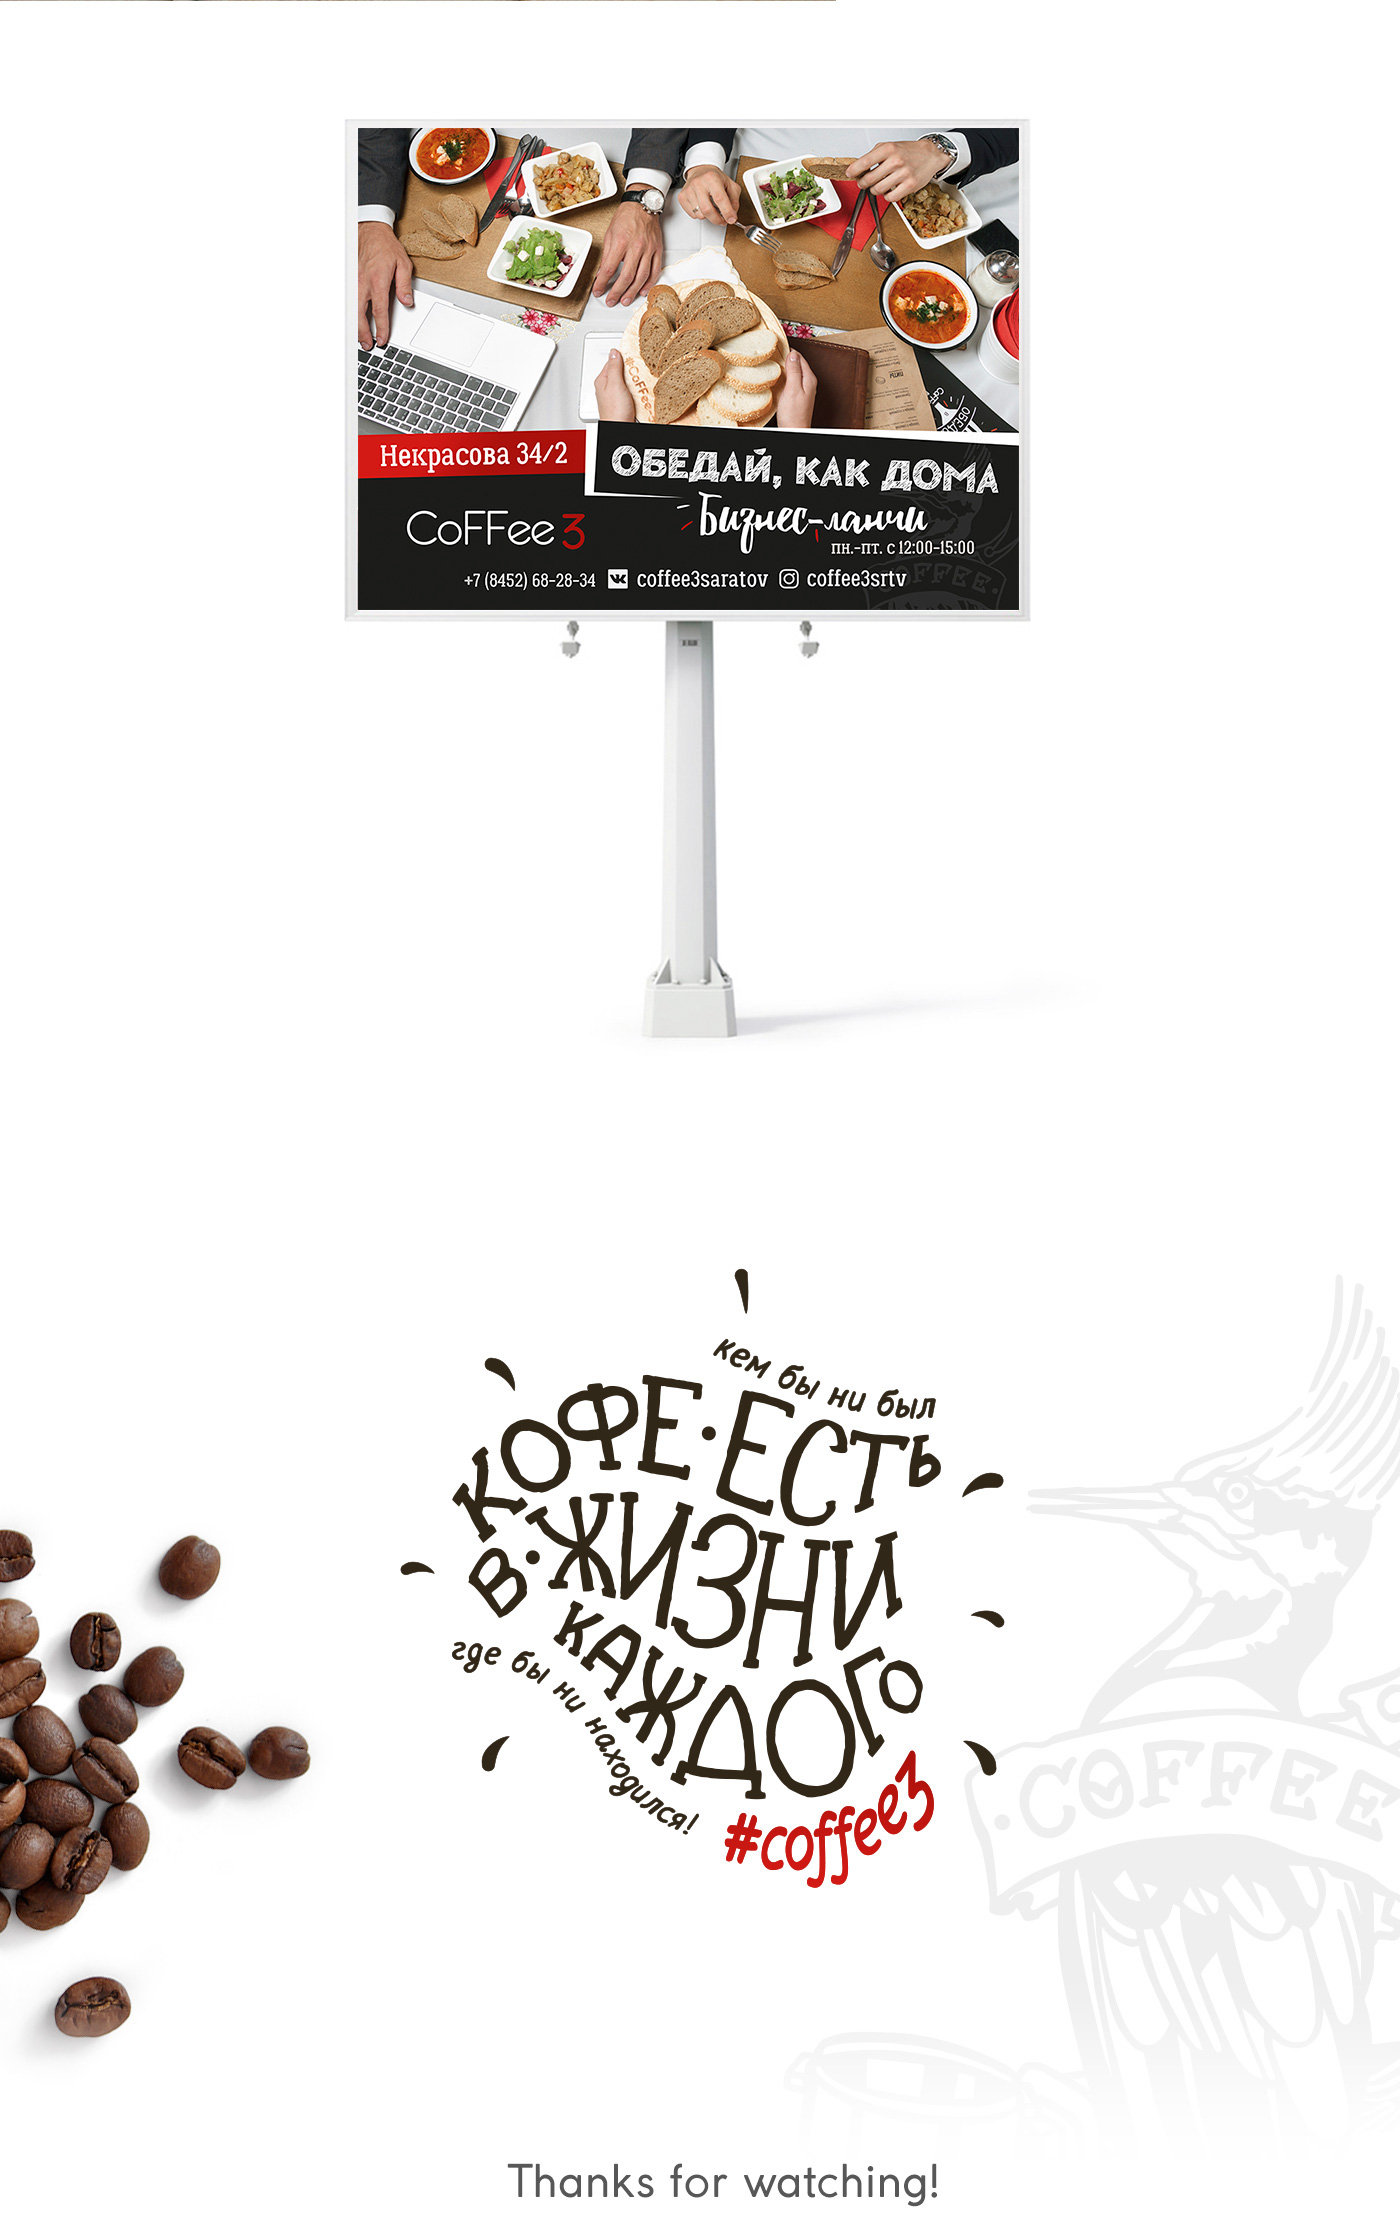 Coffee coffeeshop branding 